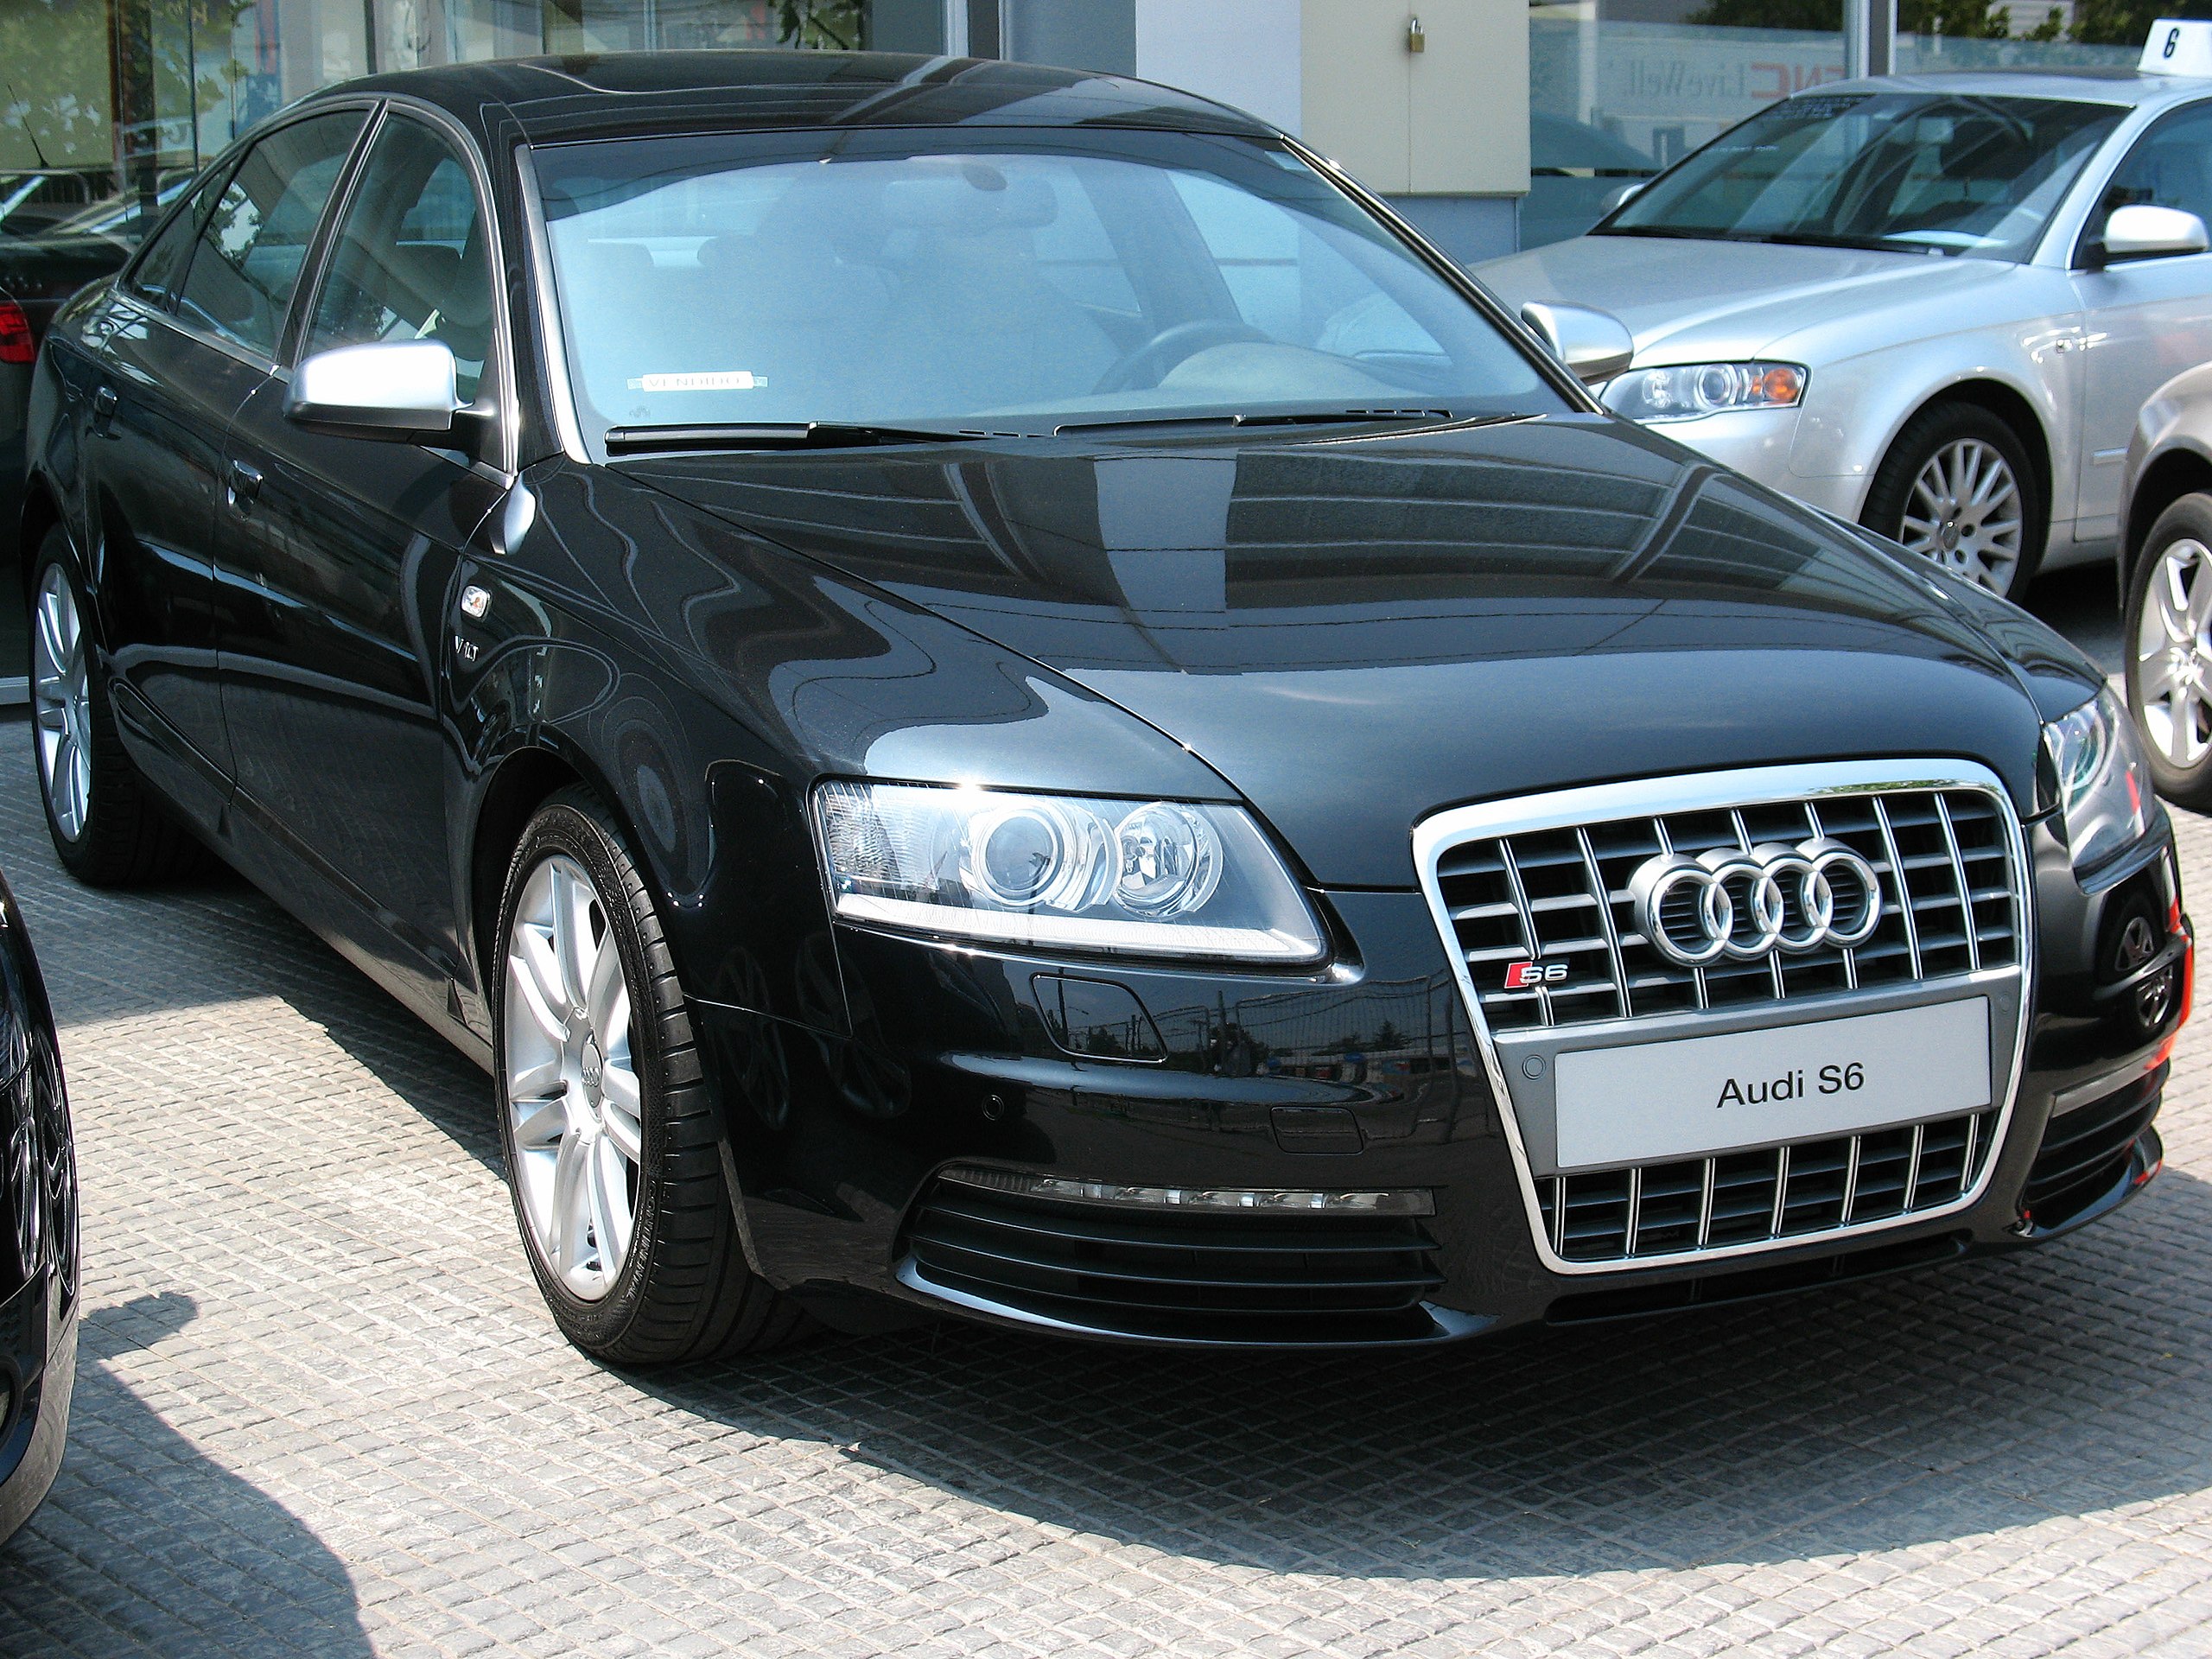 File:Audi S6 V10 2009 (17834283720).jpg - Wikimedia Commons